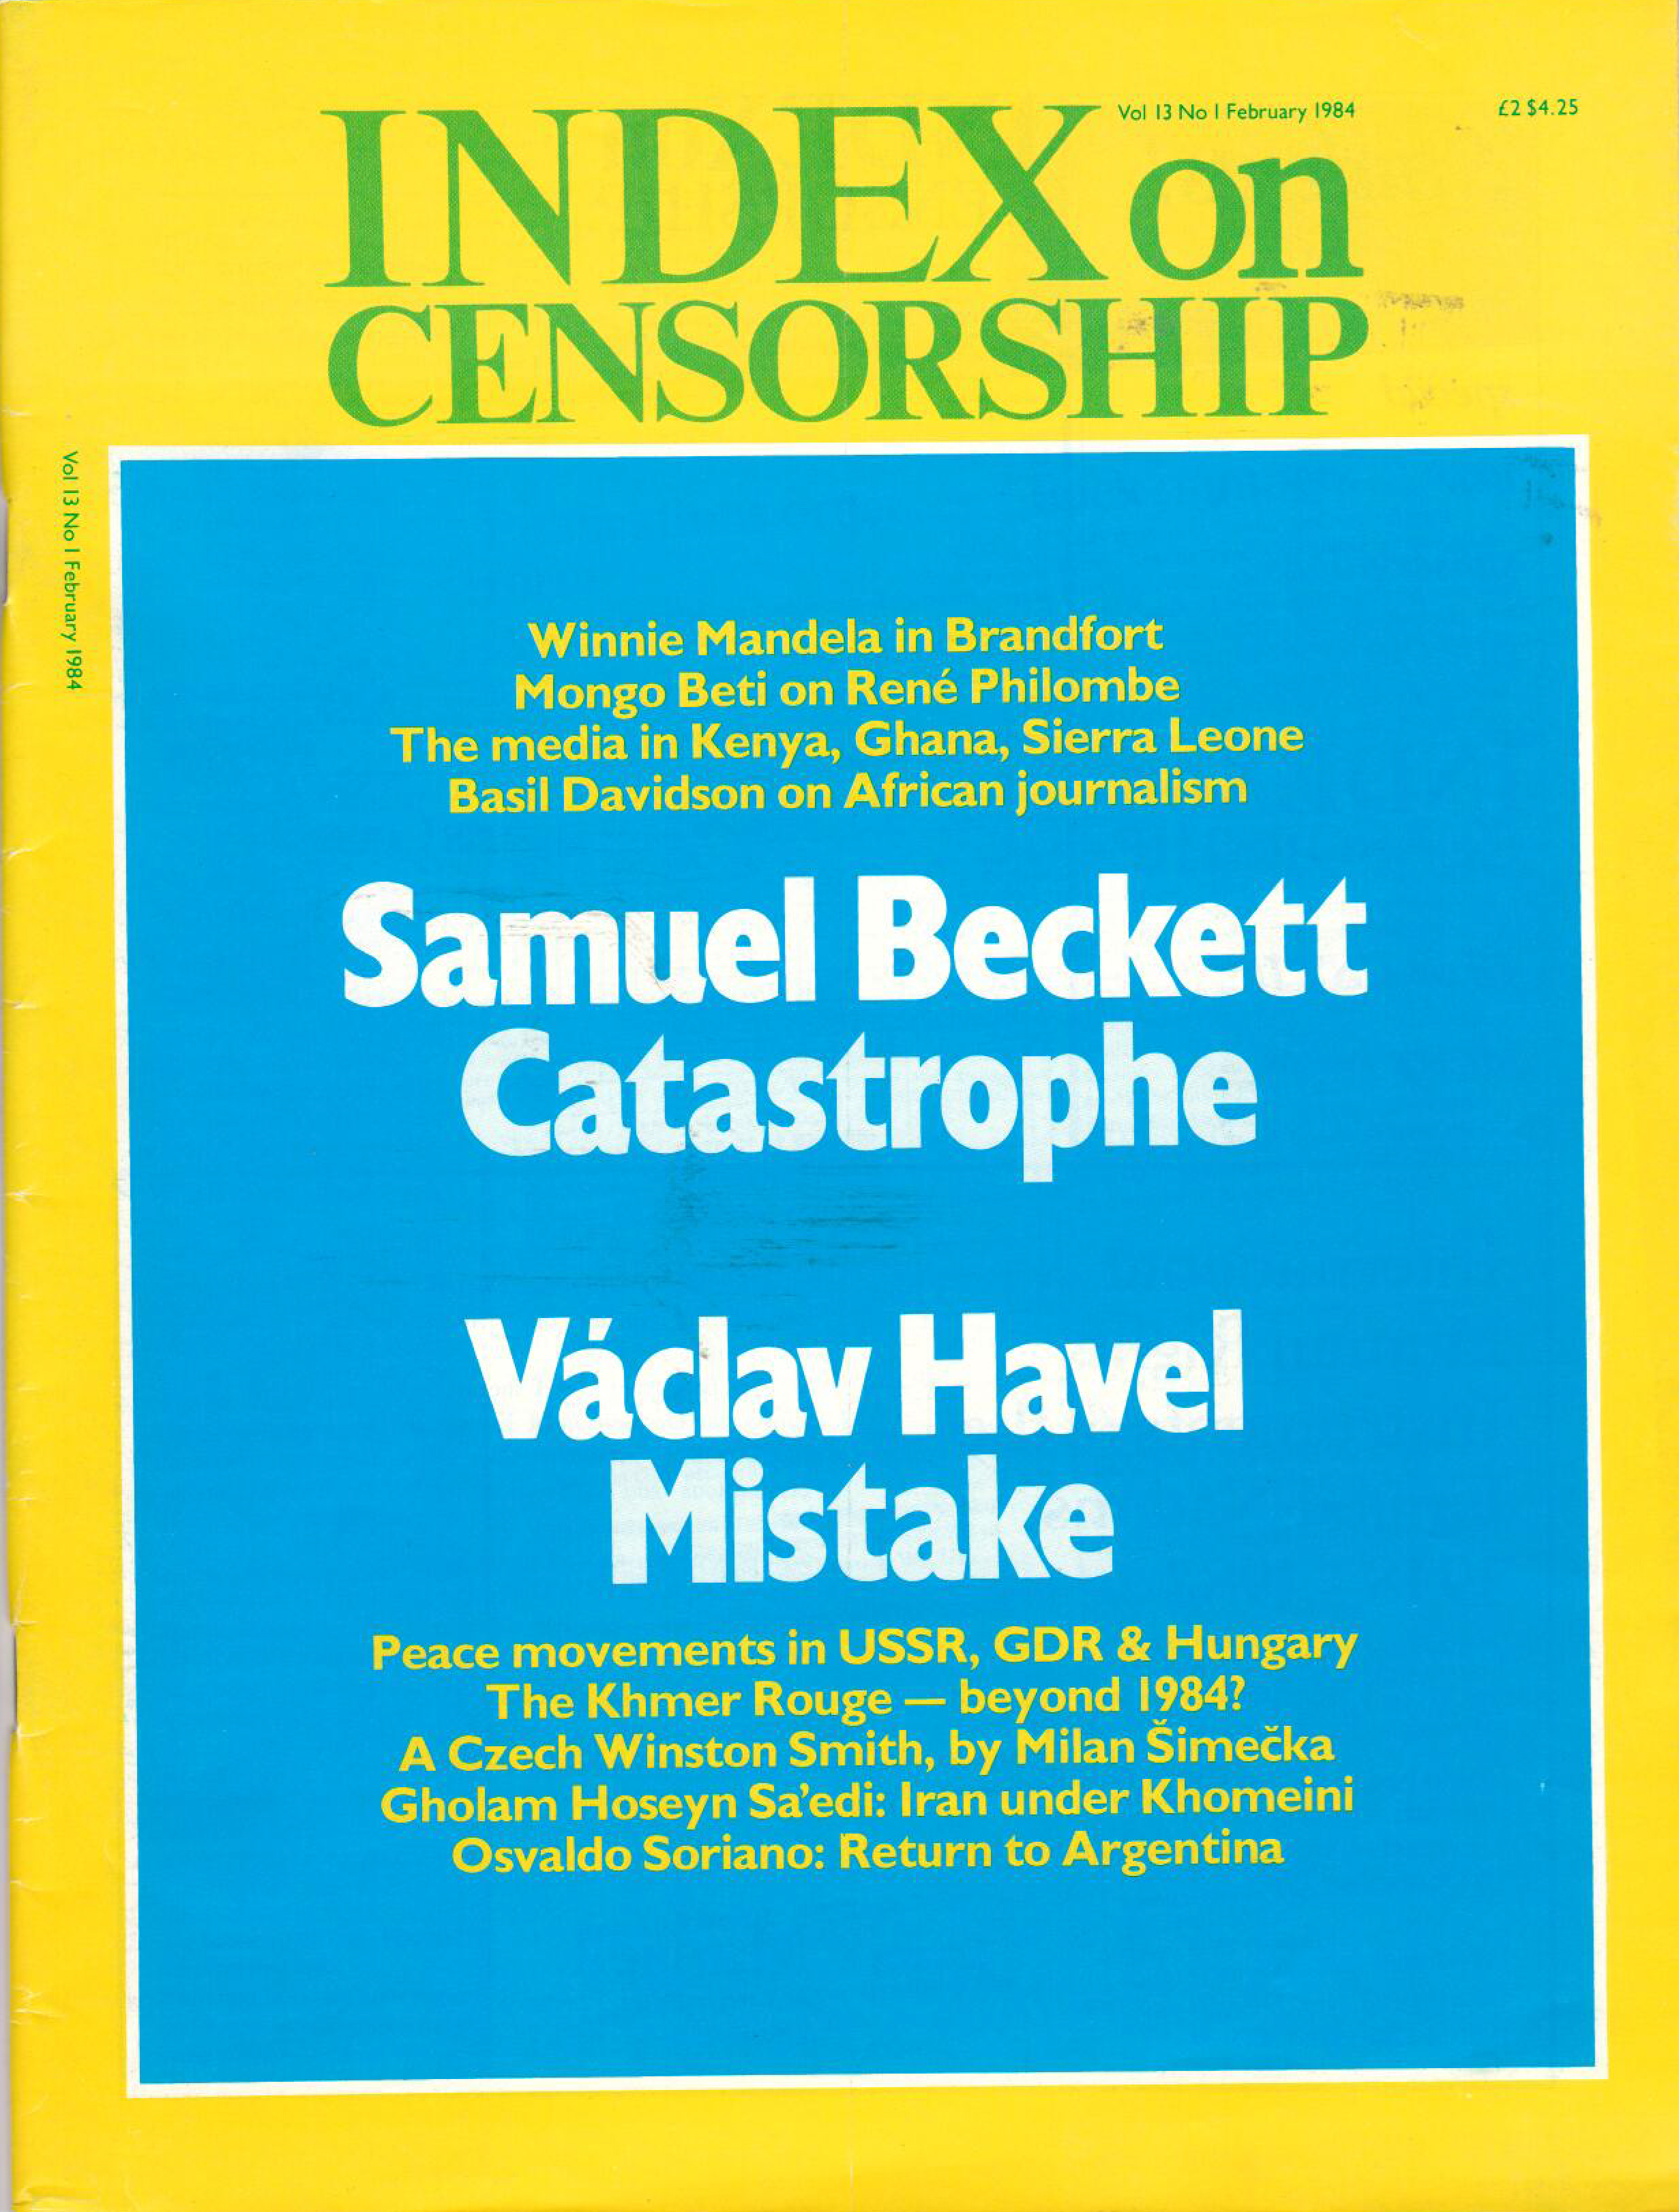 Samuel Beckett: Catastrophe, the January 1984 issue of Index on Censorship magazine.